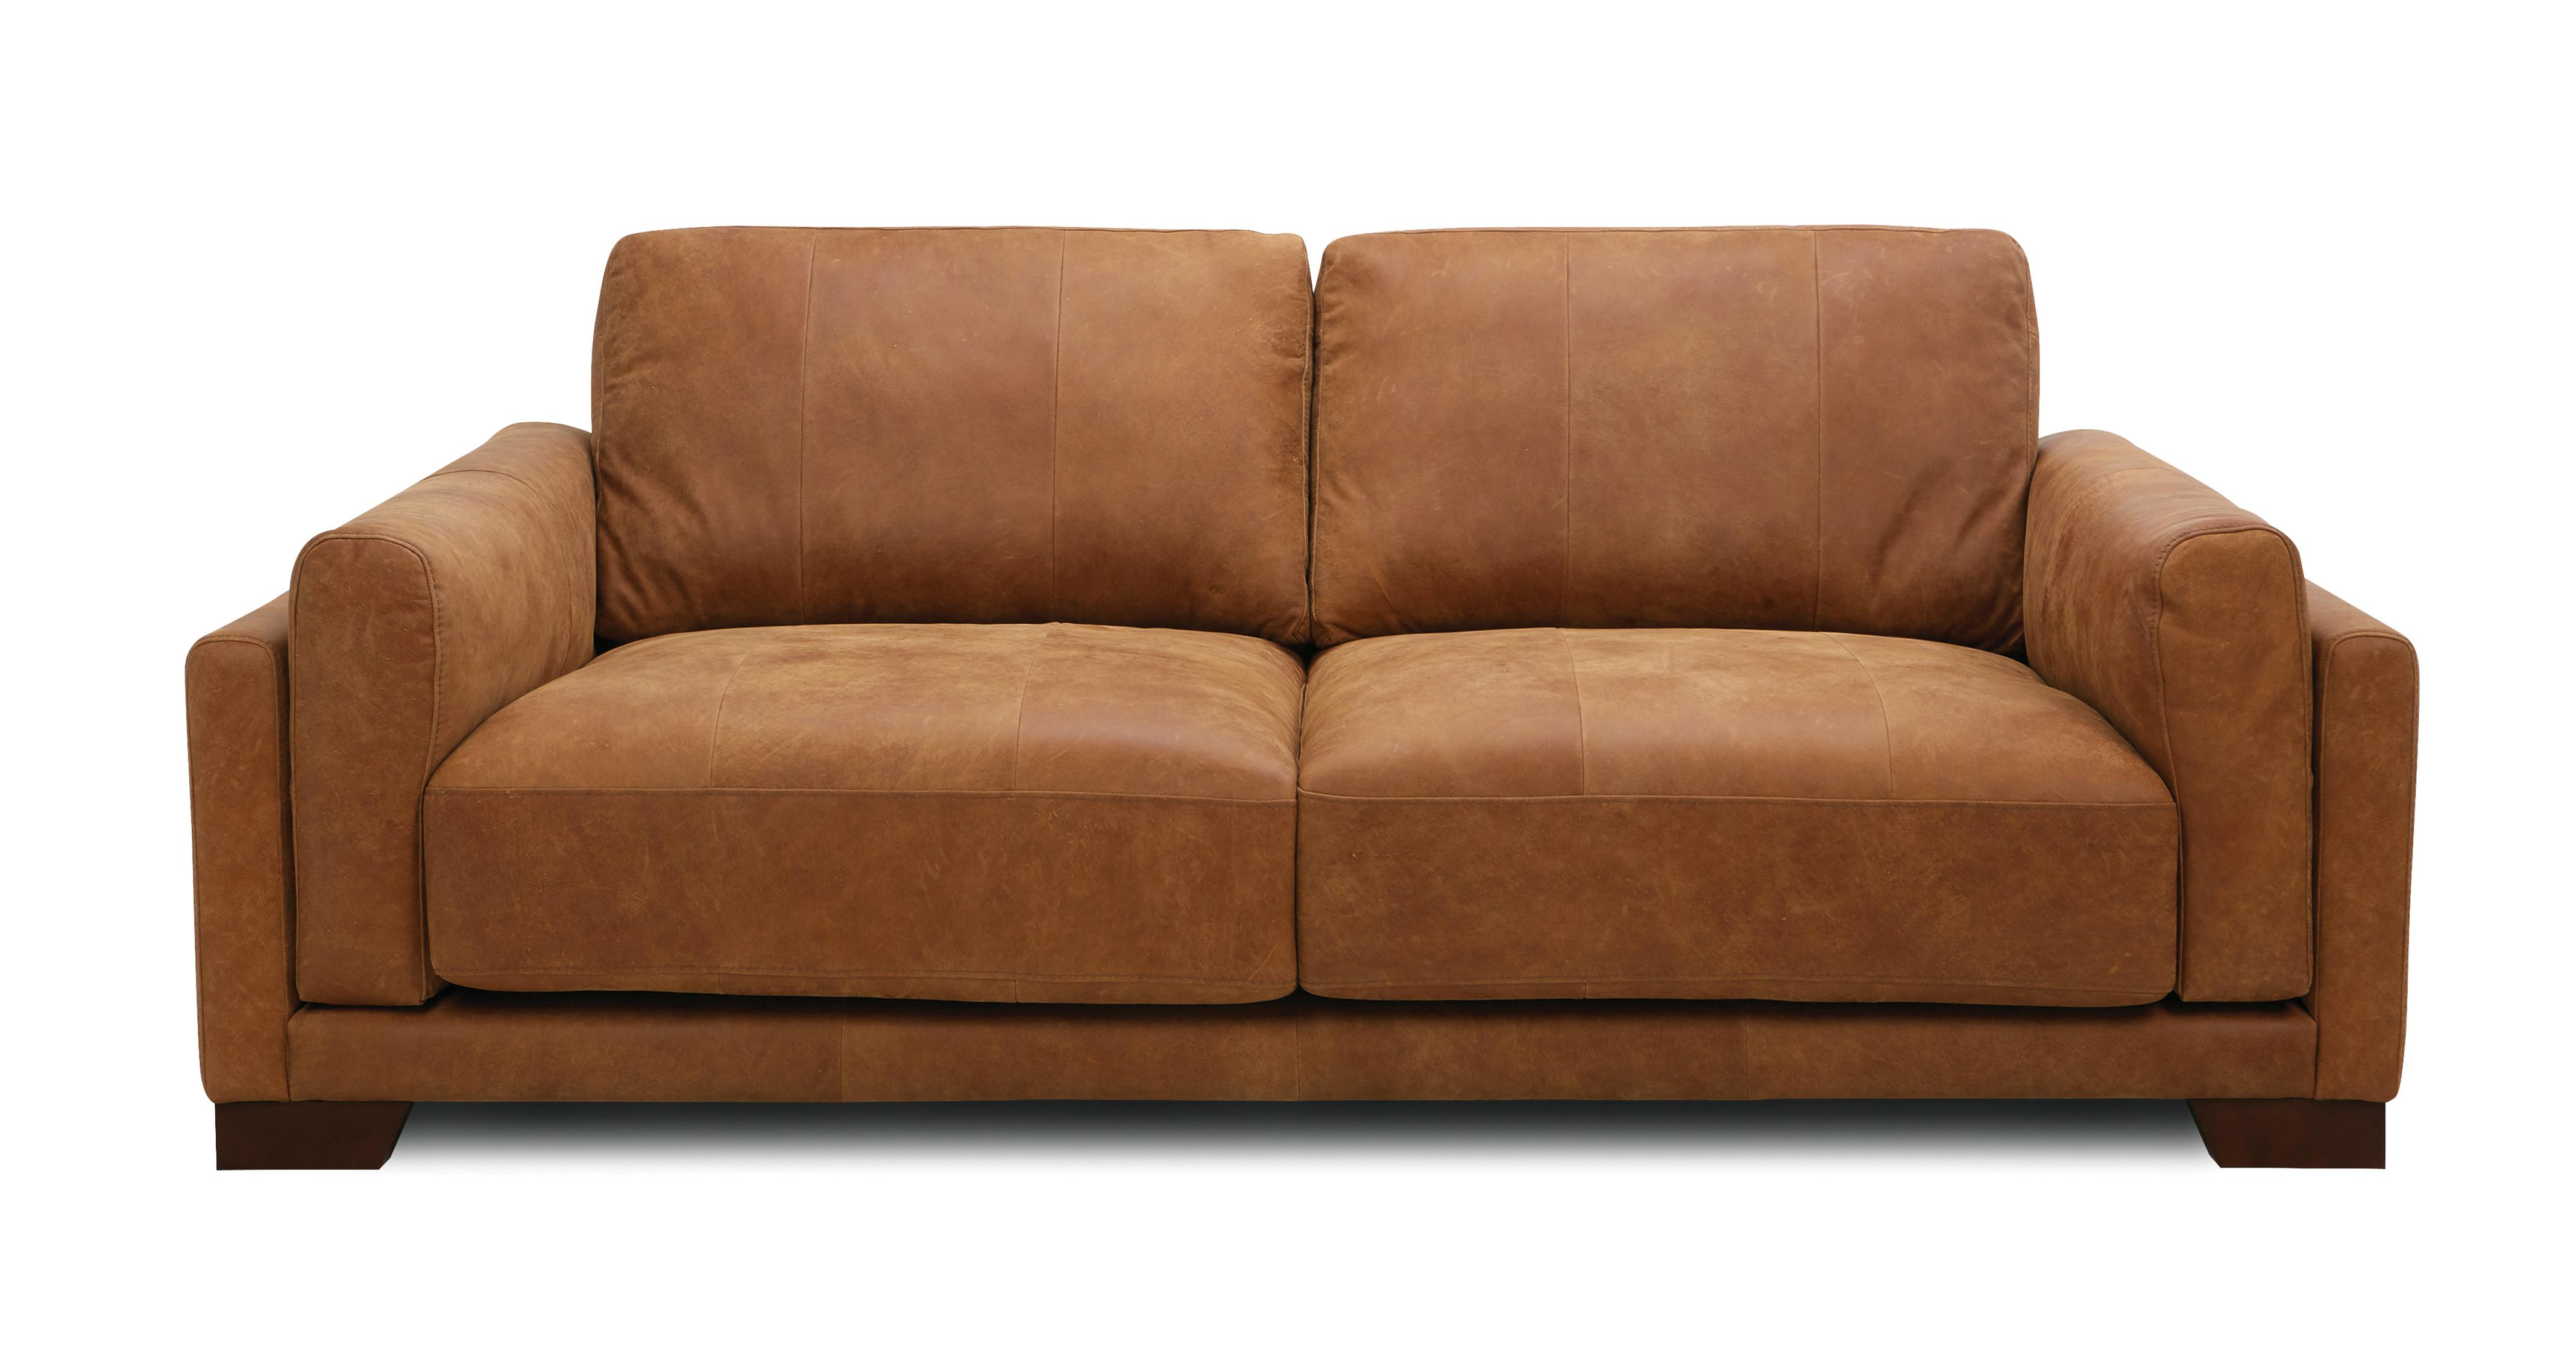 Balboa 3 Seater Sofa | DFS